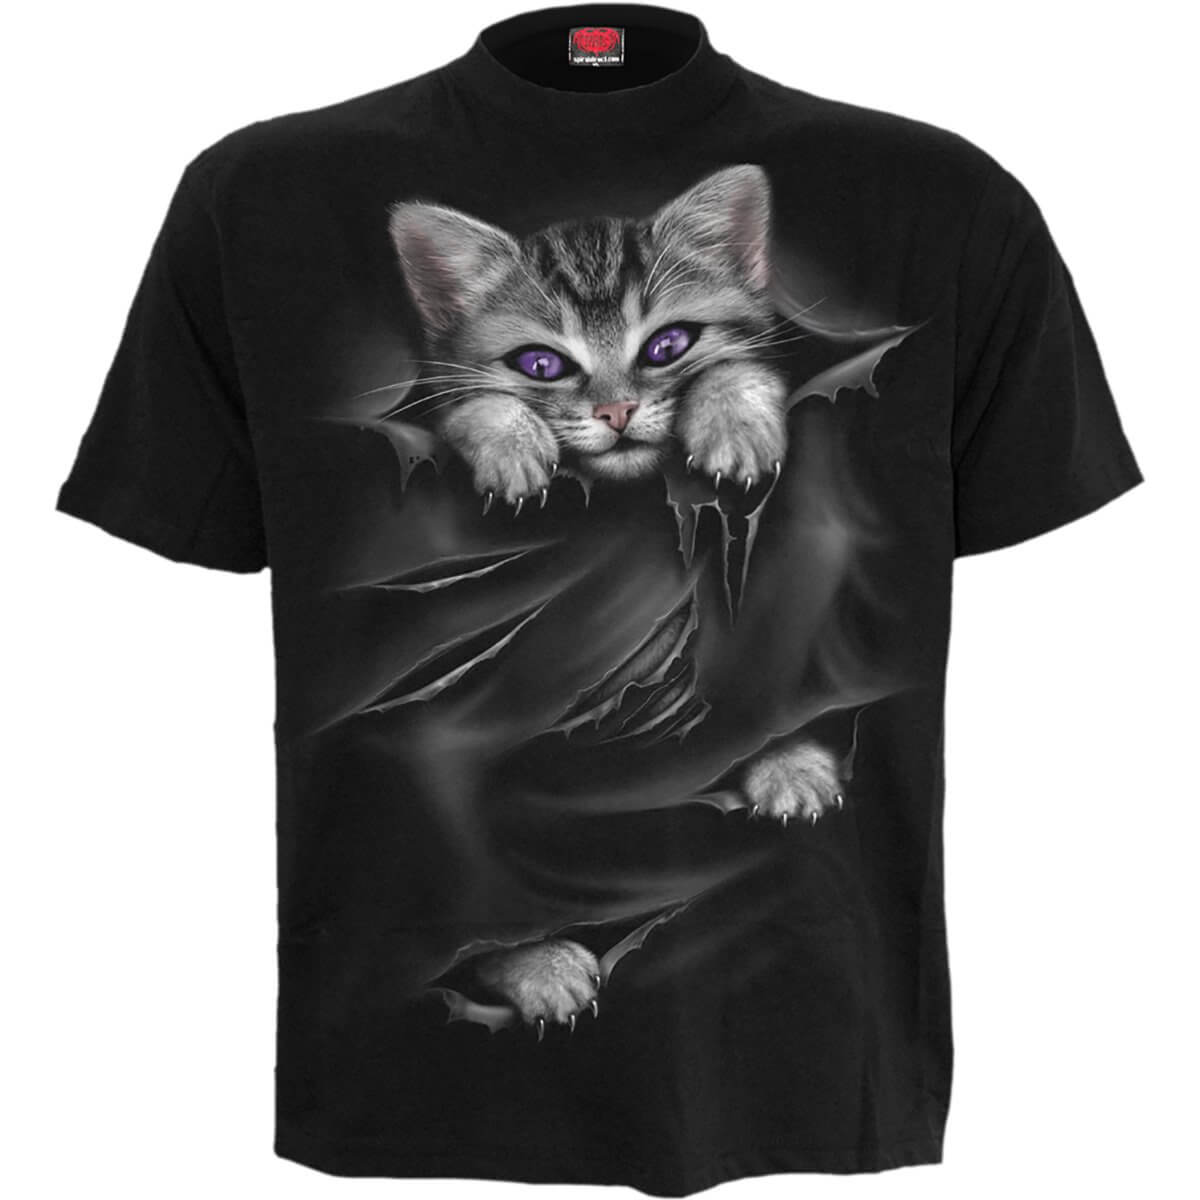 gothic t shirt with kitten design